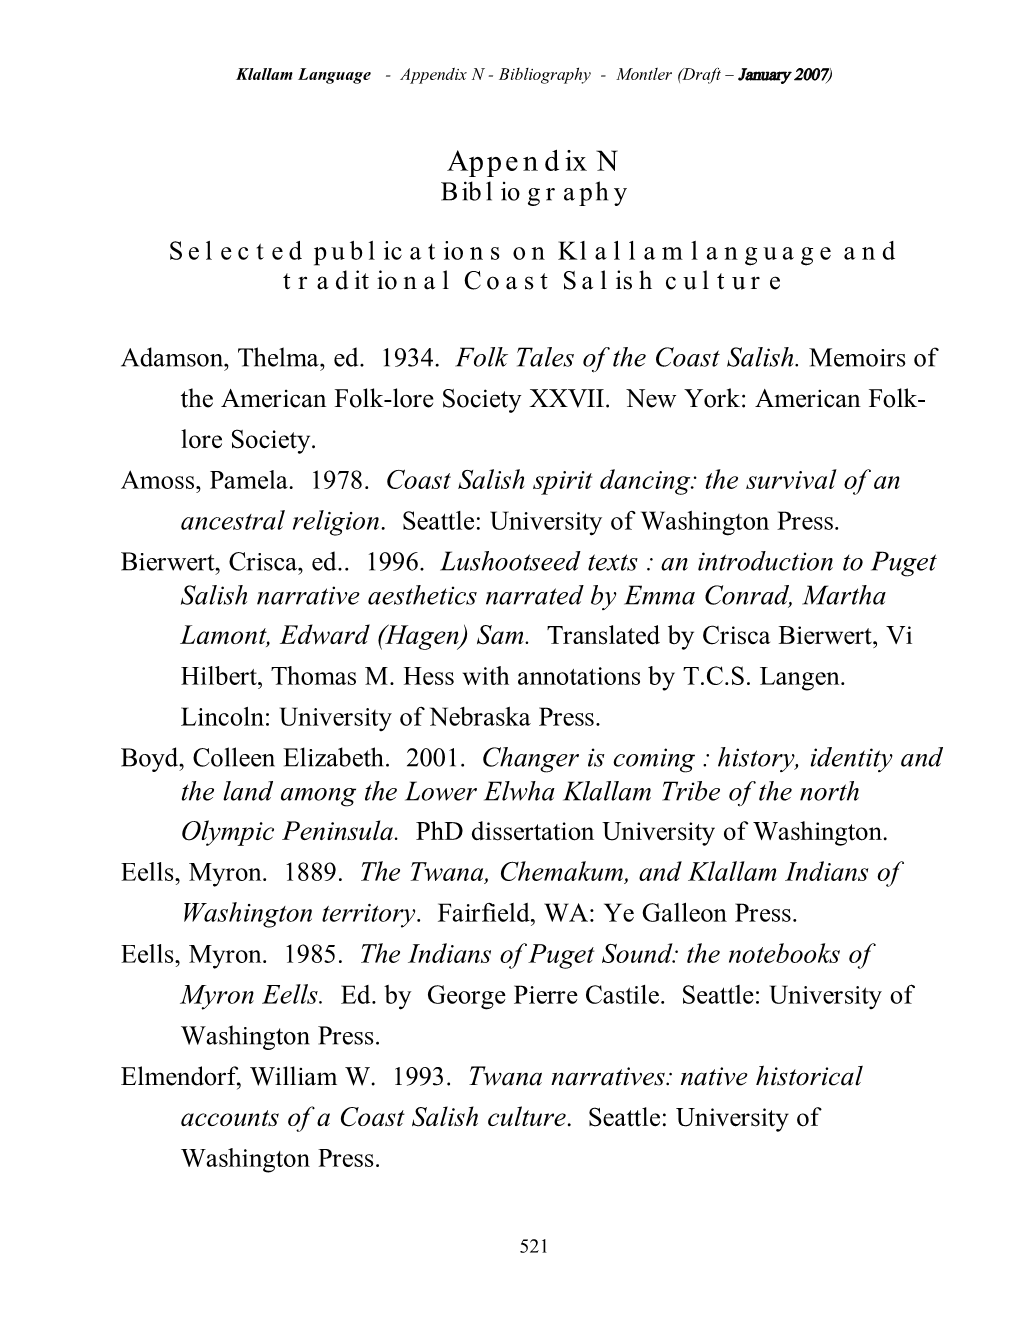 Appendix N Bibliography Selected Publications on Klallam Language